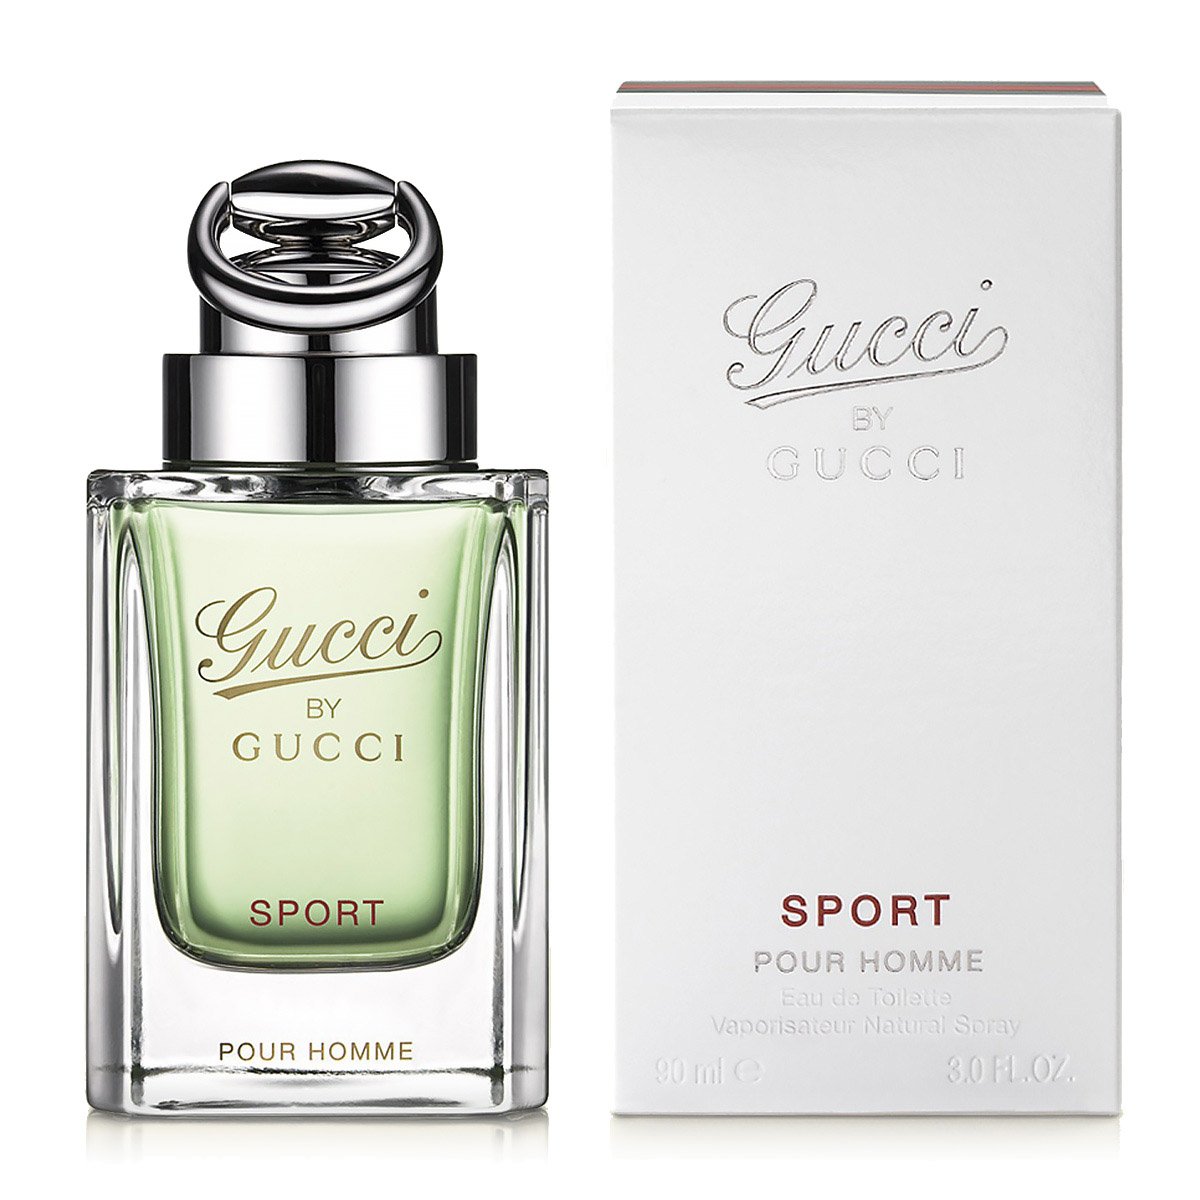 Gucci туалетная вода цены. Gucci by Gucci Sport pour homme (Gucci). Gucci by Gucci Sport. Gucci by Gucci Sport pour homme 90ml. Gucci by Gucci Sport 90 мл.